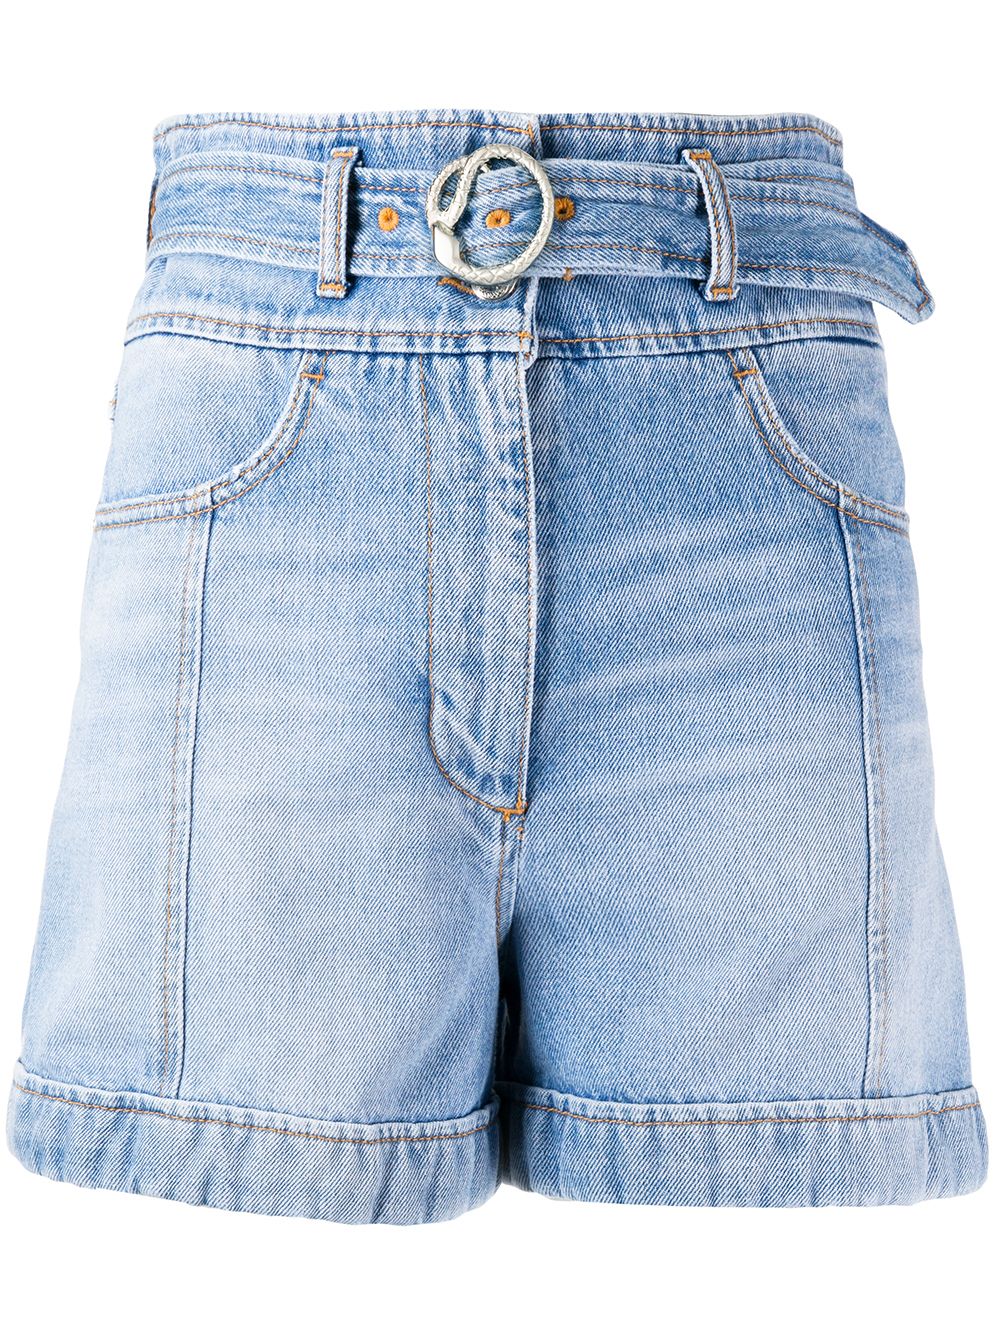 Just Cavalli джинсовые шорты с завышенной талией от Just Cavalli